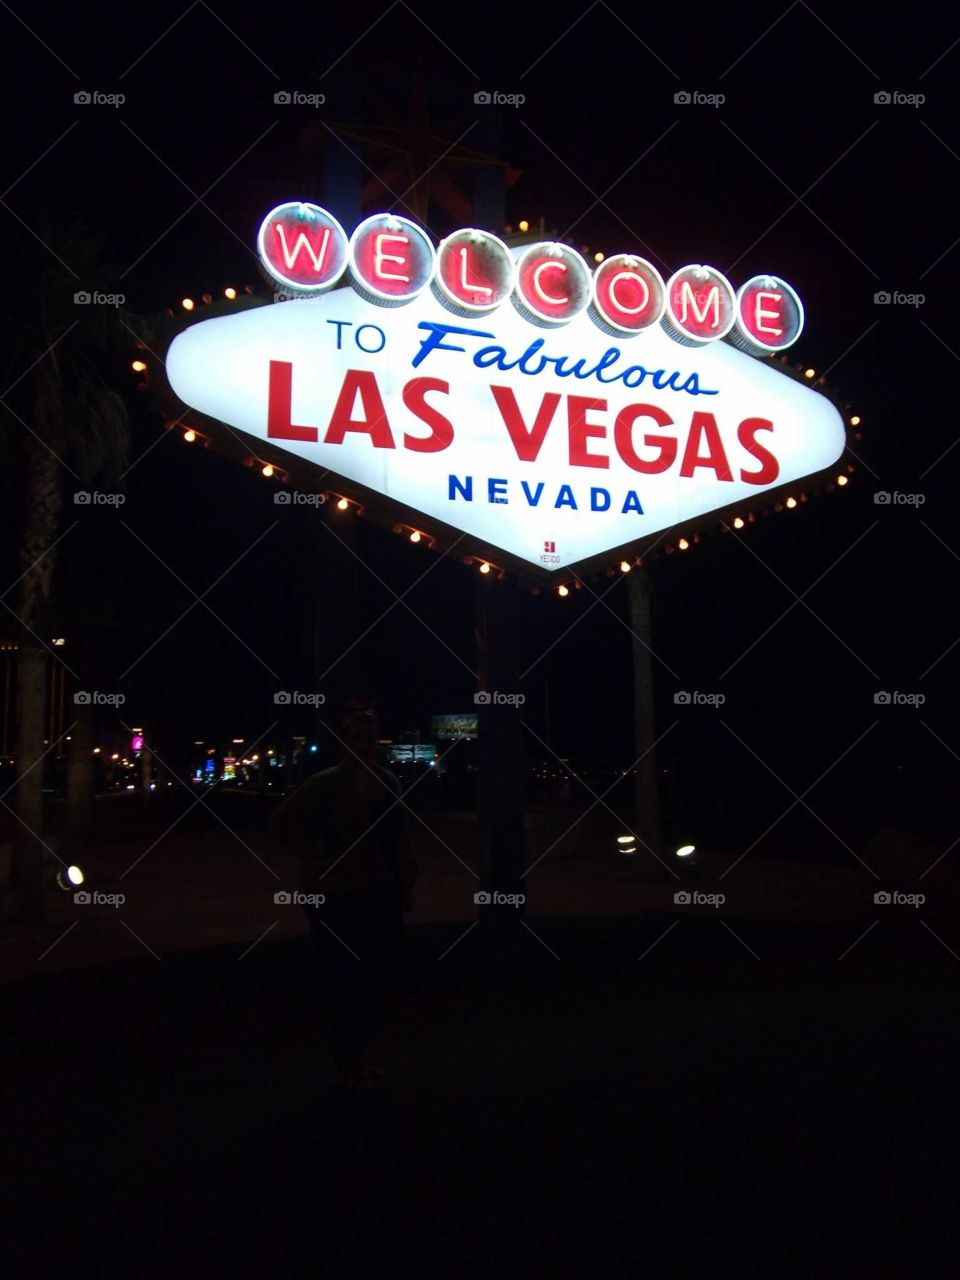 Las Vegas baby